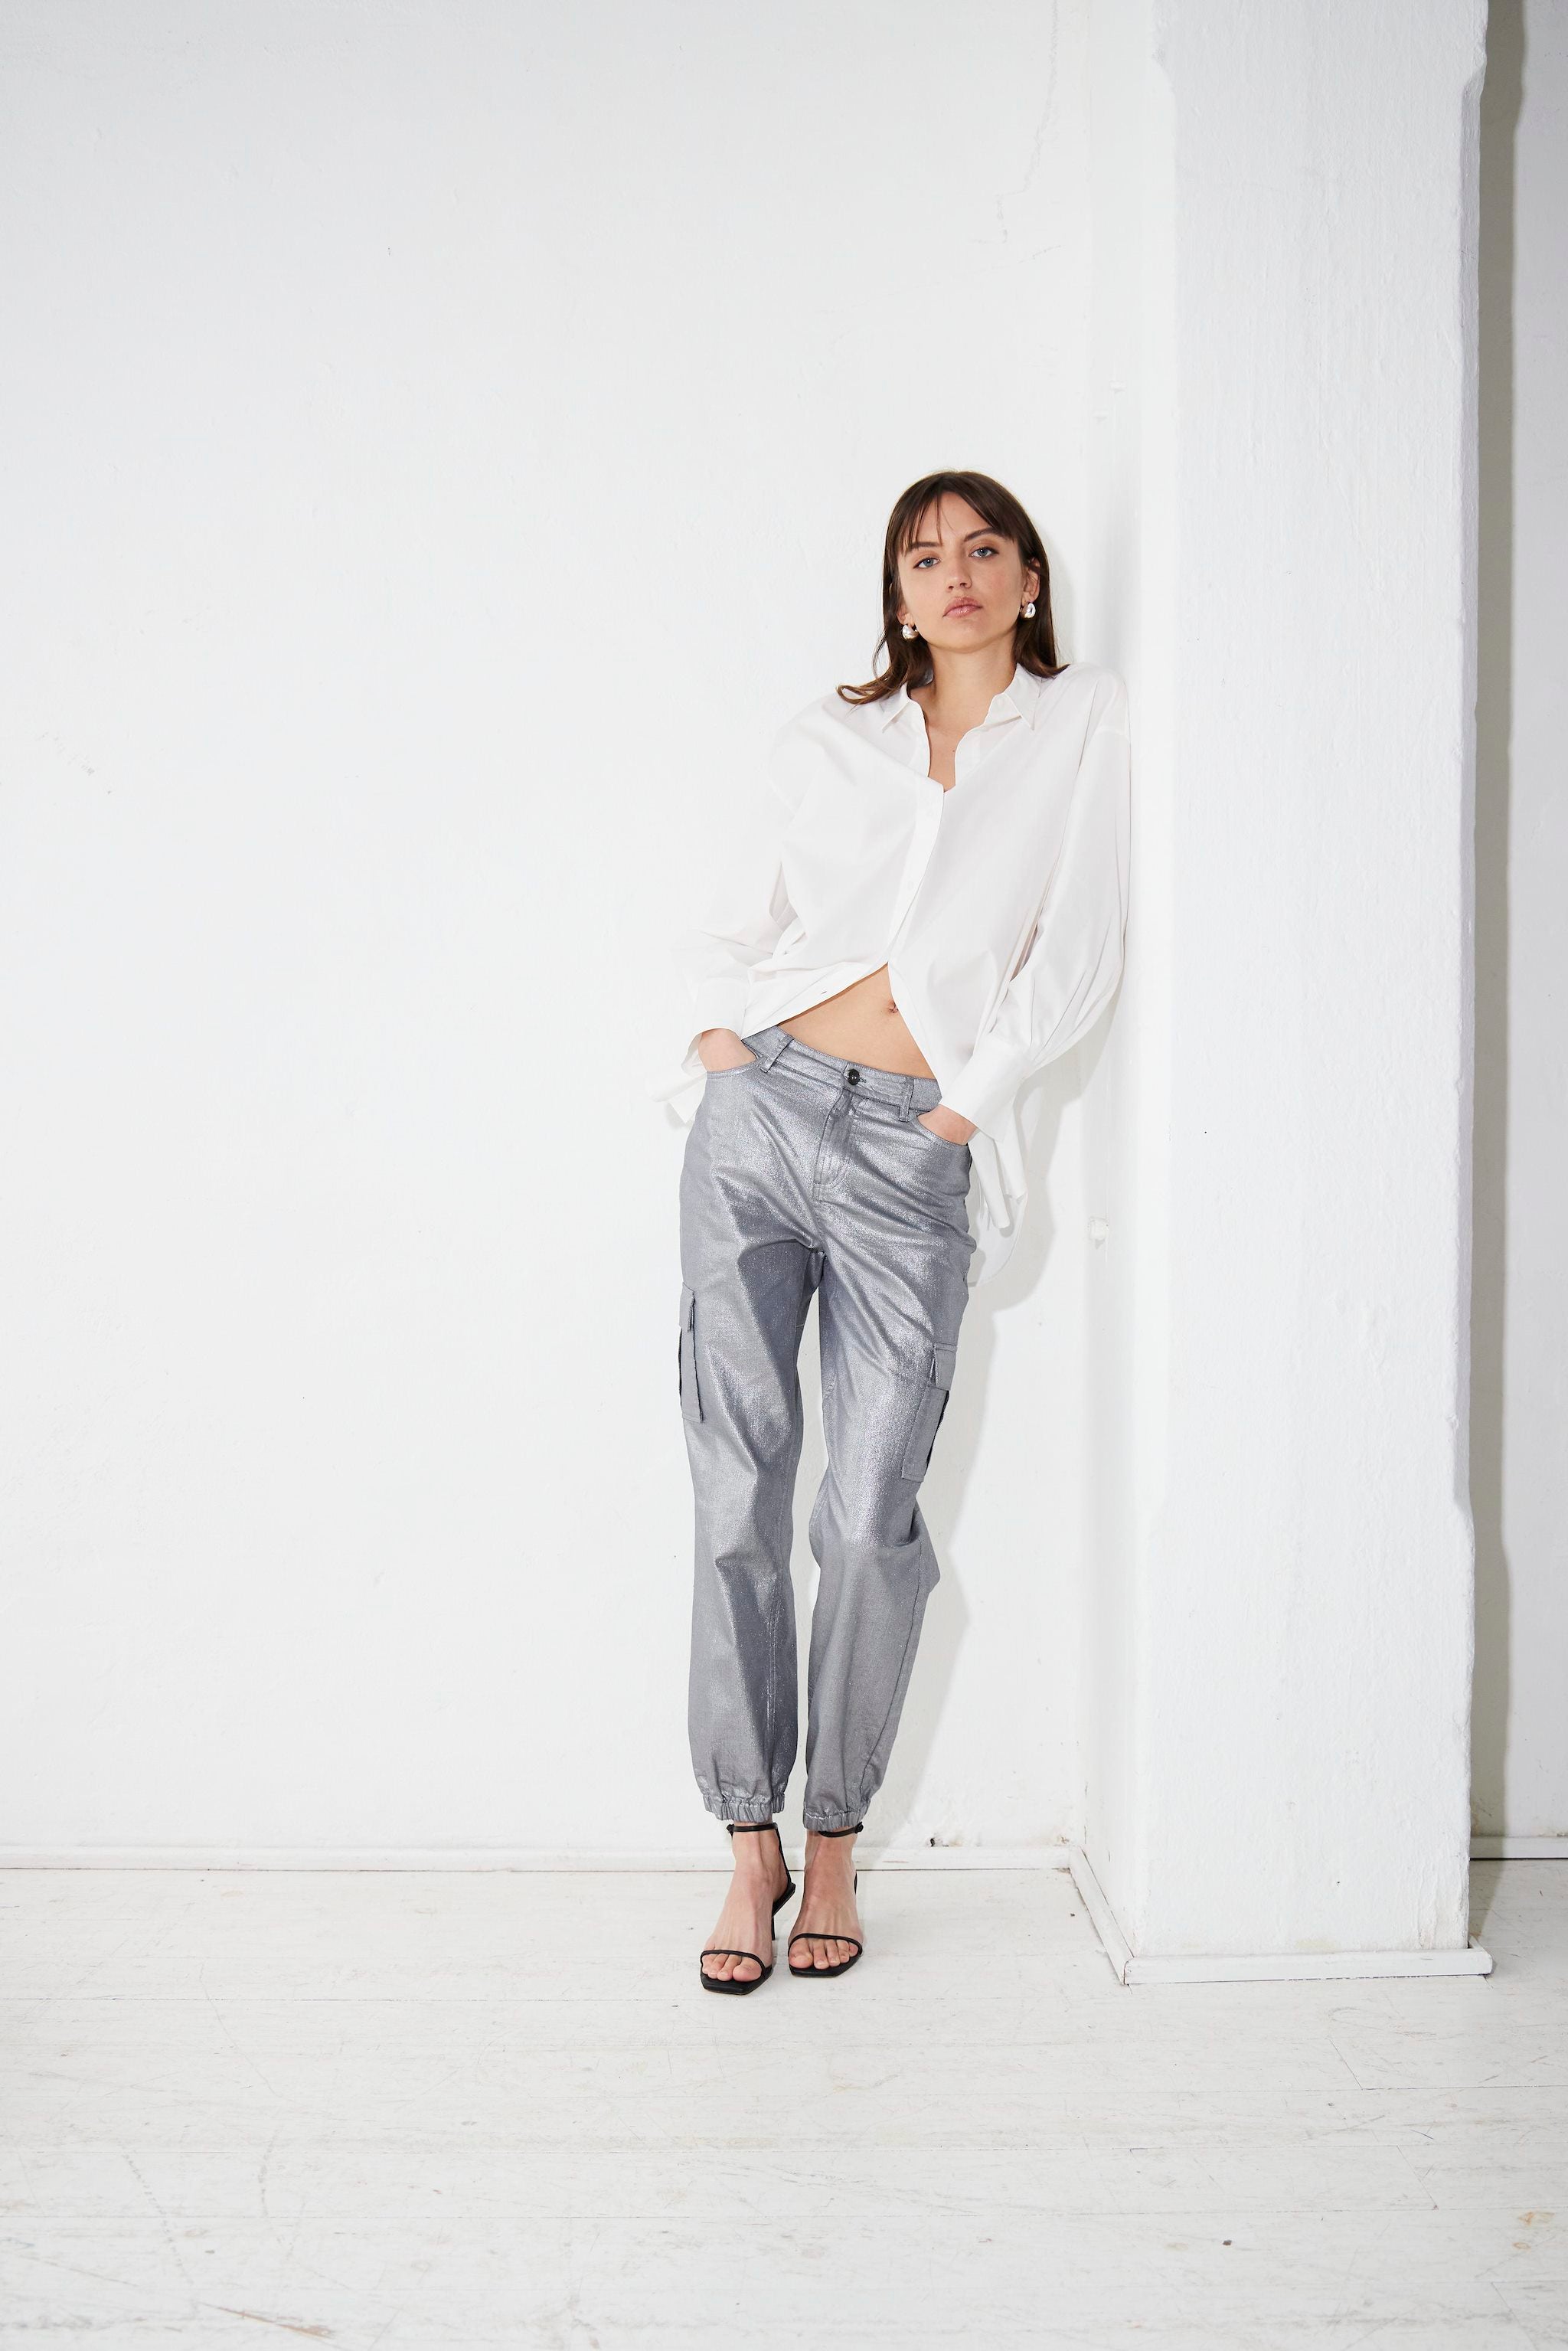 ICHI Metallic Cargo Jeans - Silver